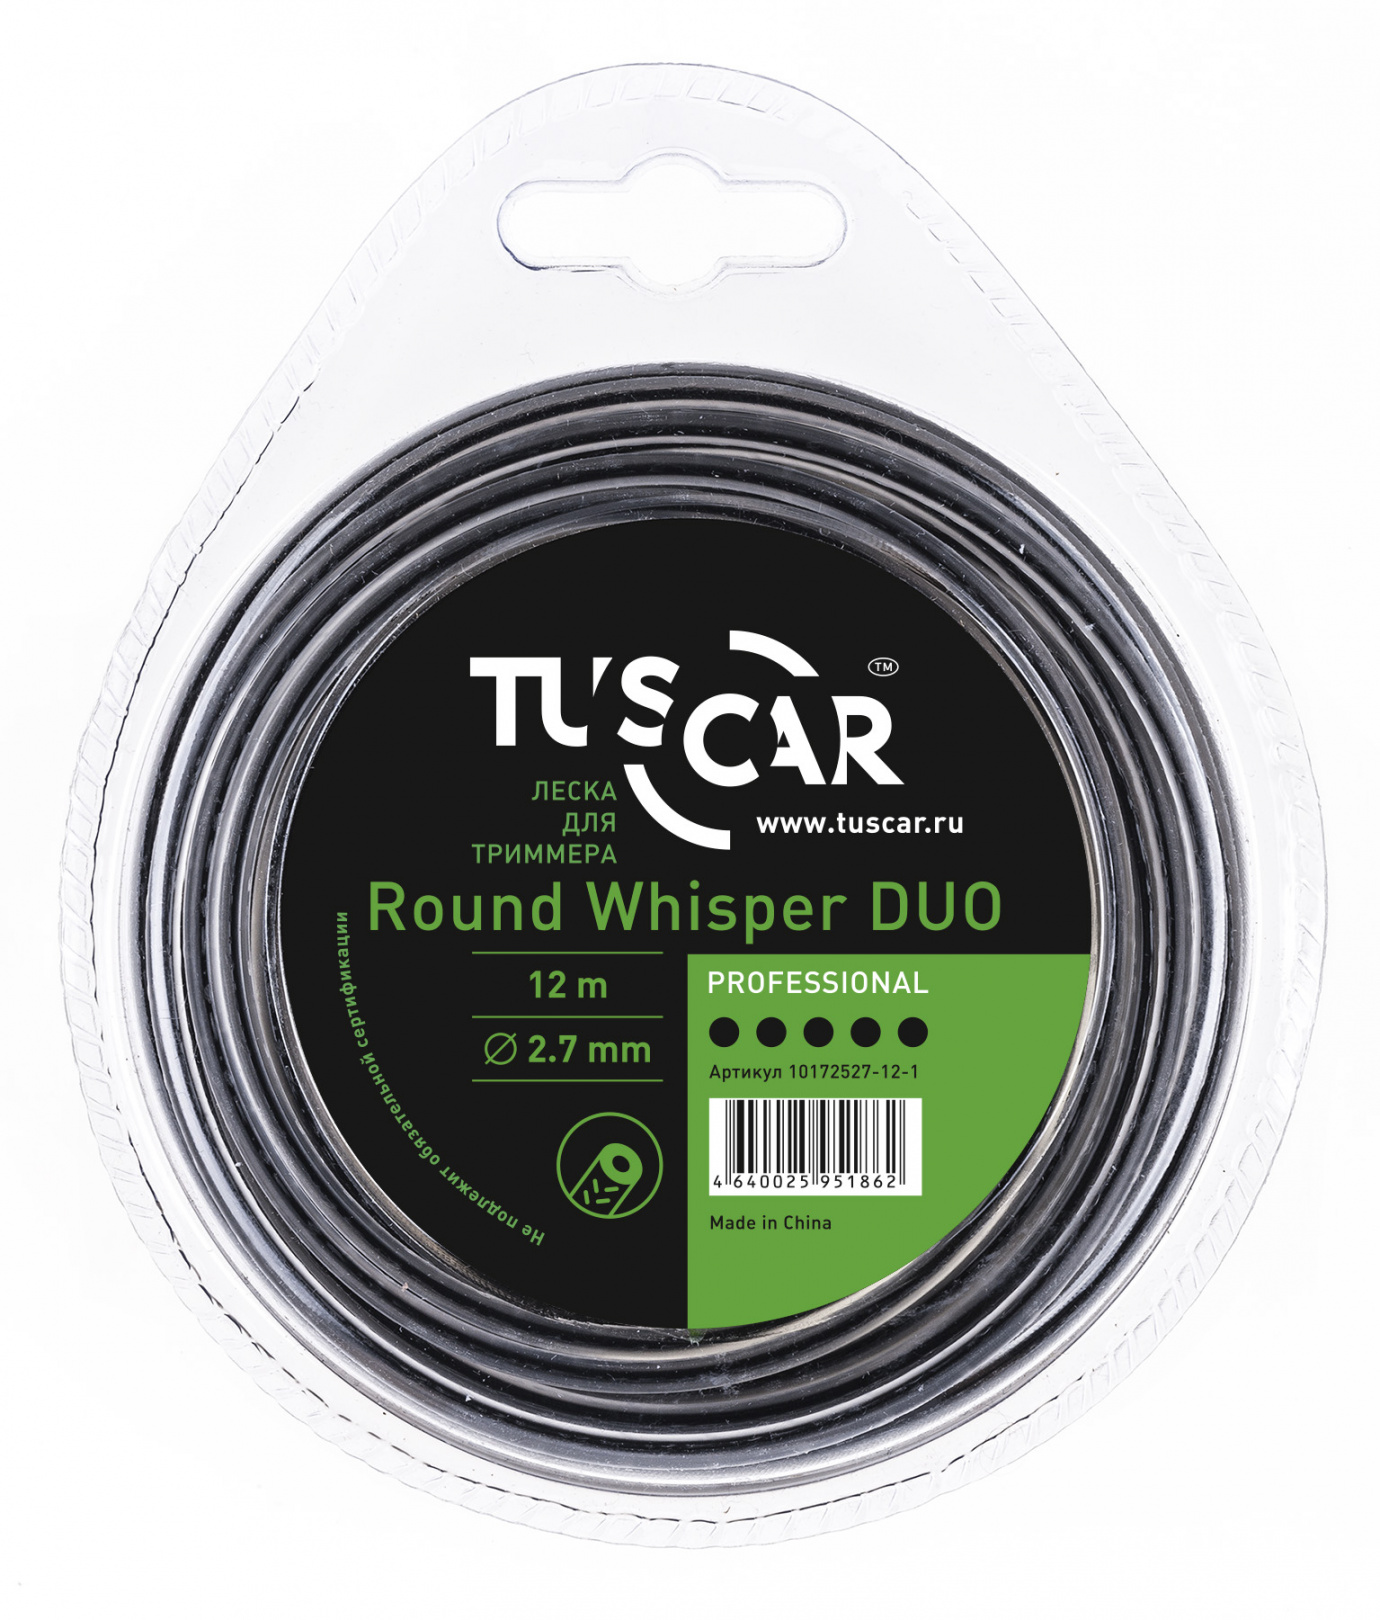 фото Tuscar леска для триммера round whisper duo, professional, 2.4mmx12m 10172524-12-1